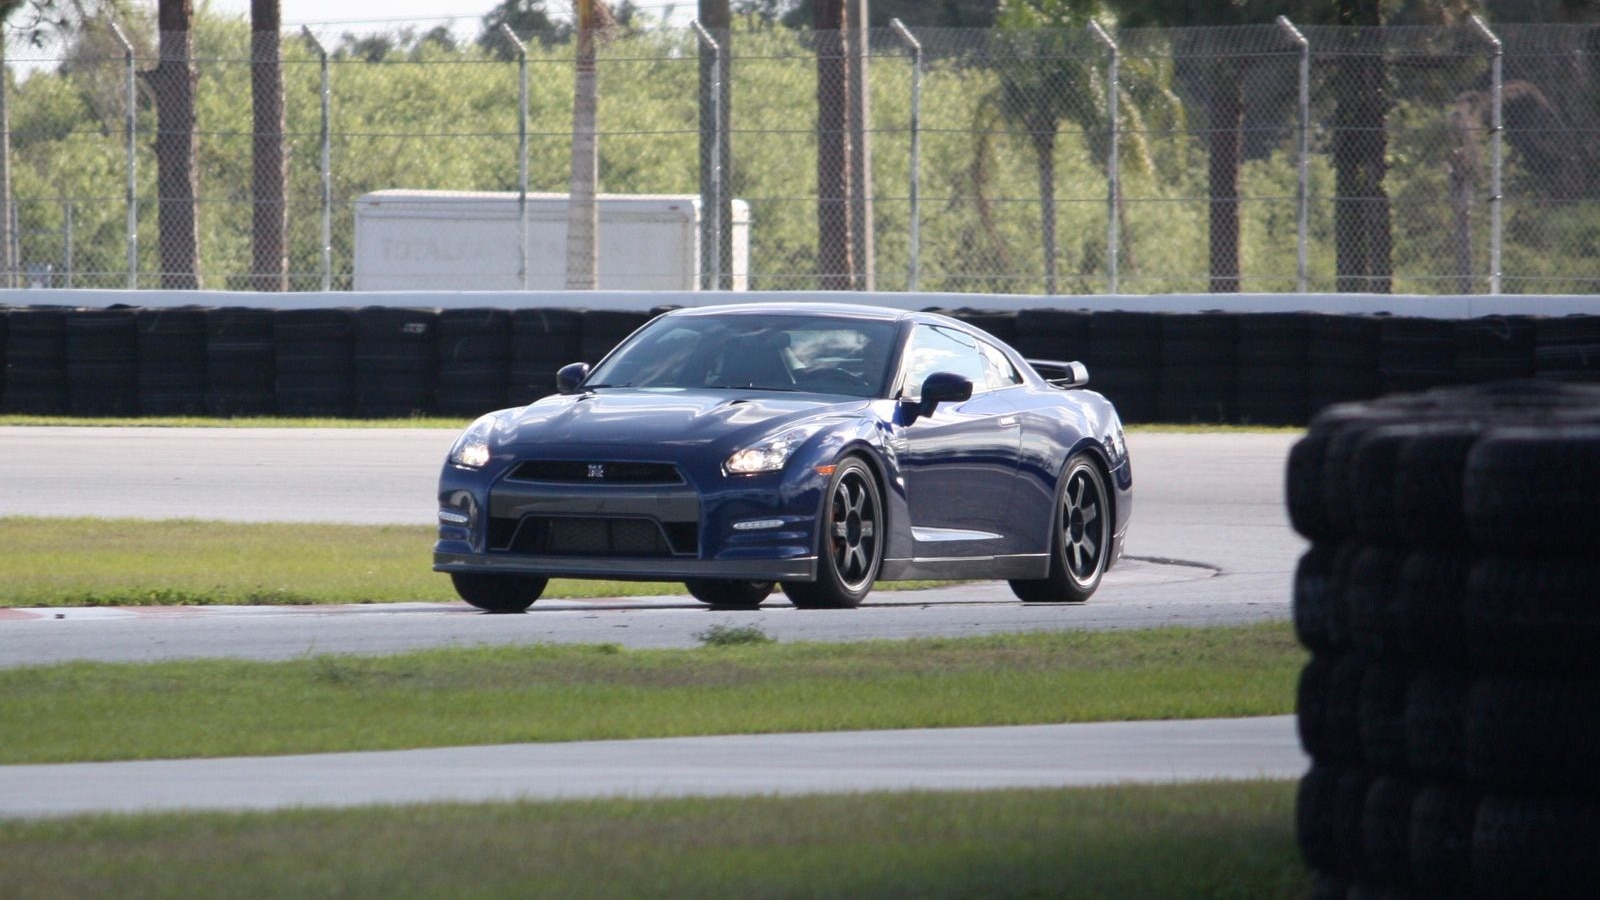 The 2013 Nissan GT-R at Palm Beach International Raceway